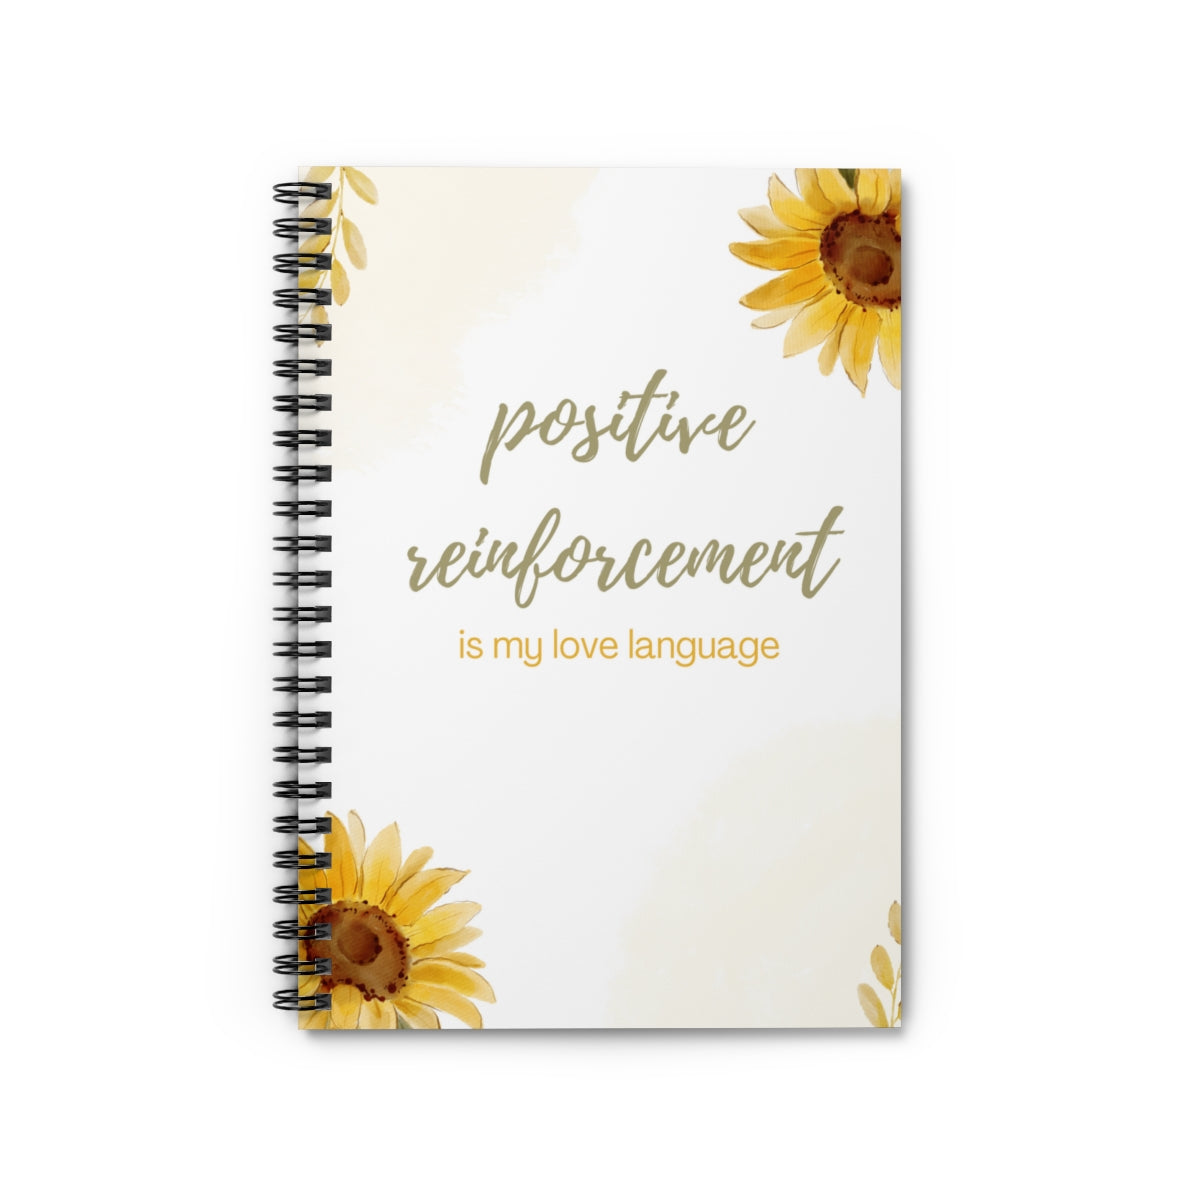 Positive Reinforcement Spiral Notebook - Ruled Line